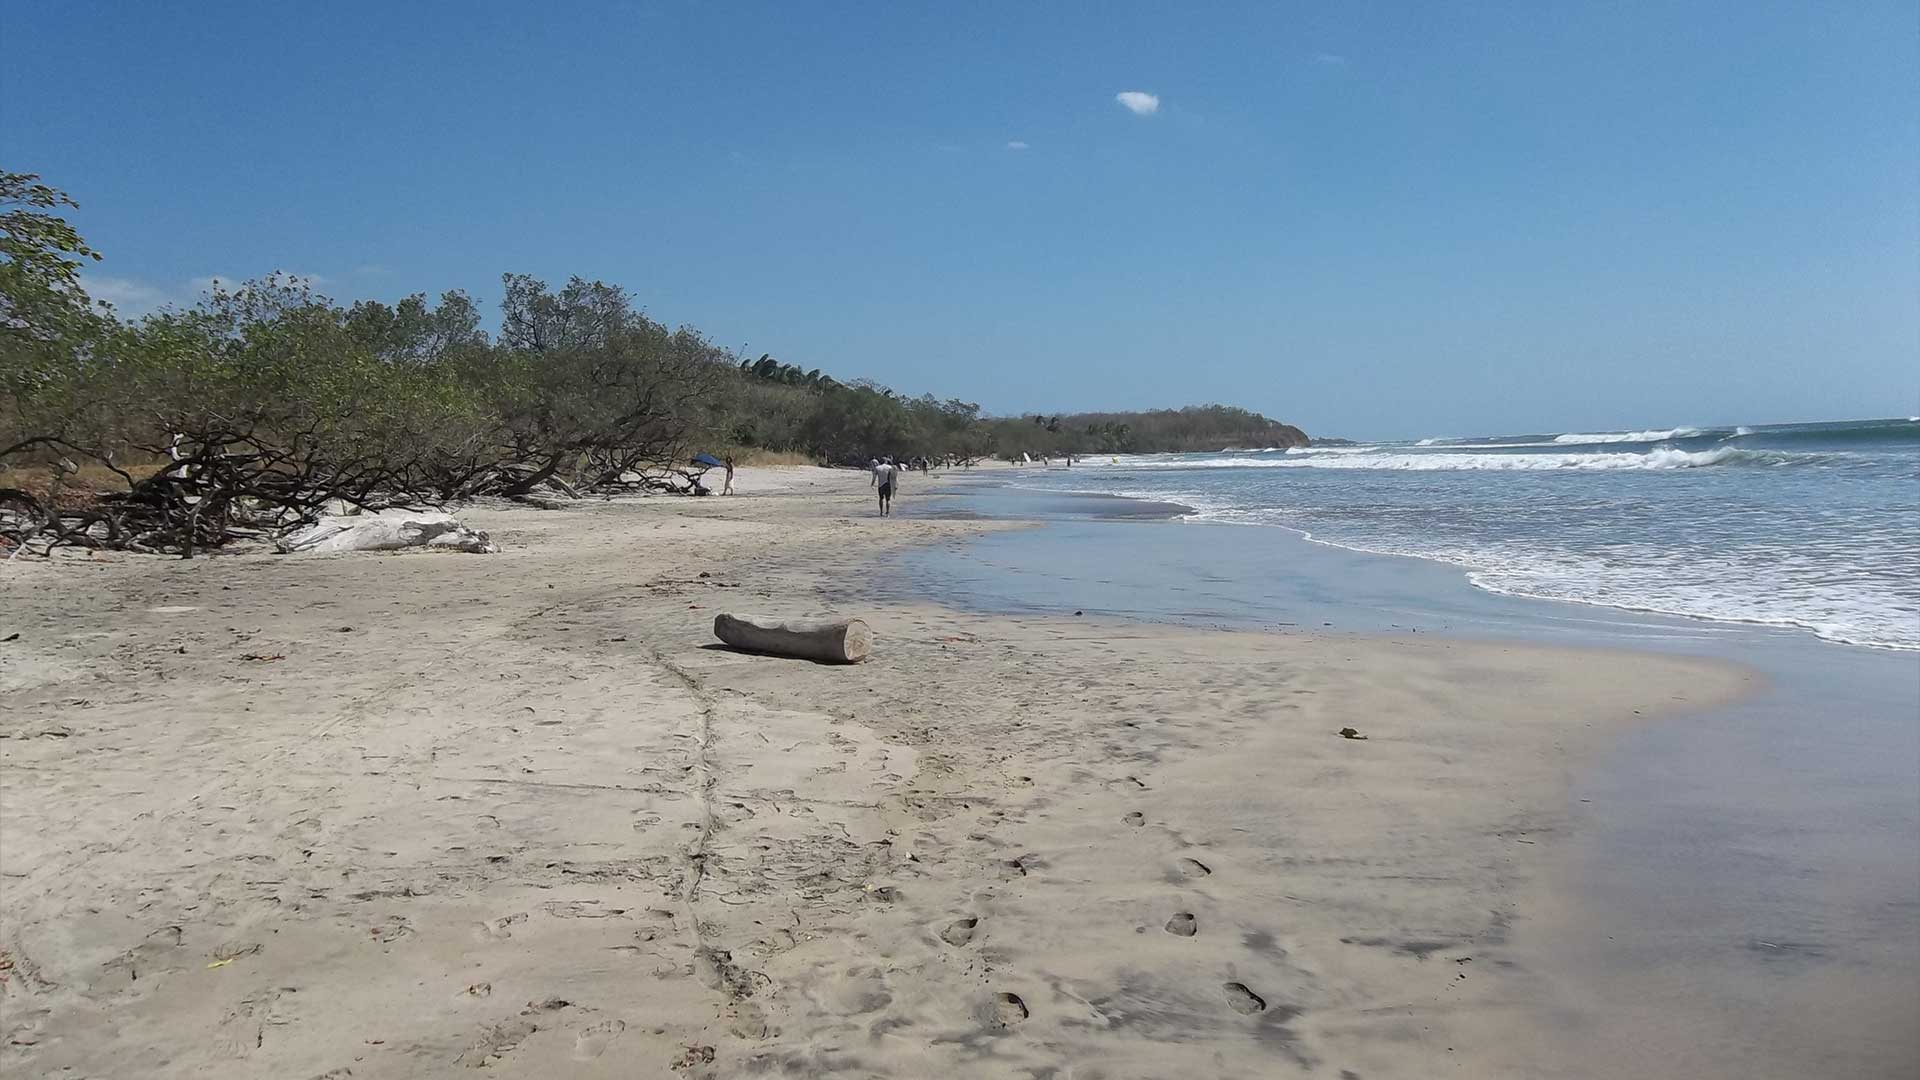 Sunny day on the beach in Playa Grande, Costa Rica